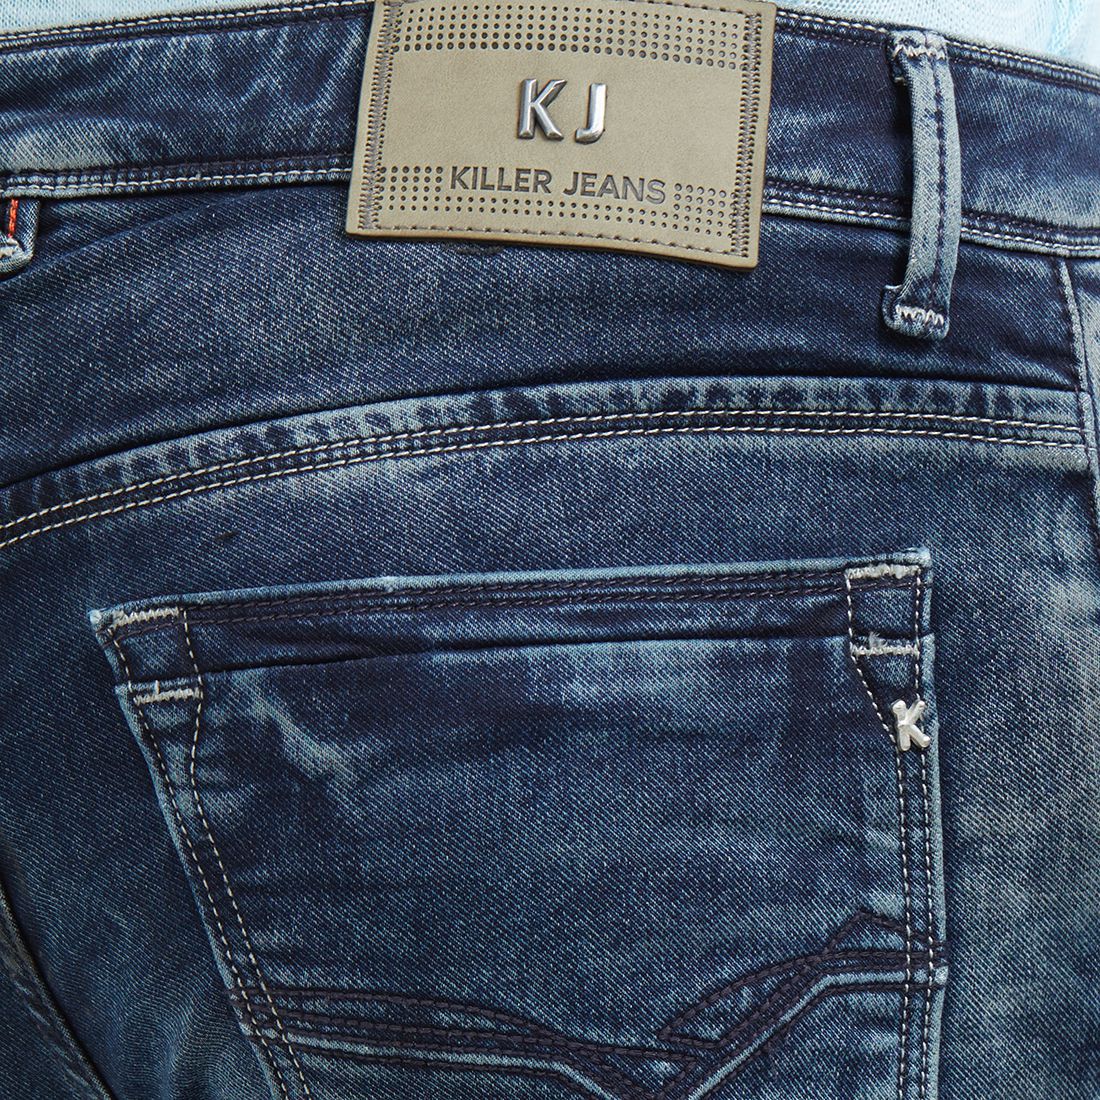 Killer Blue Skinny Jeans - Buy Killer Blue Skinny Jeans Online at Best ...